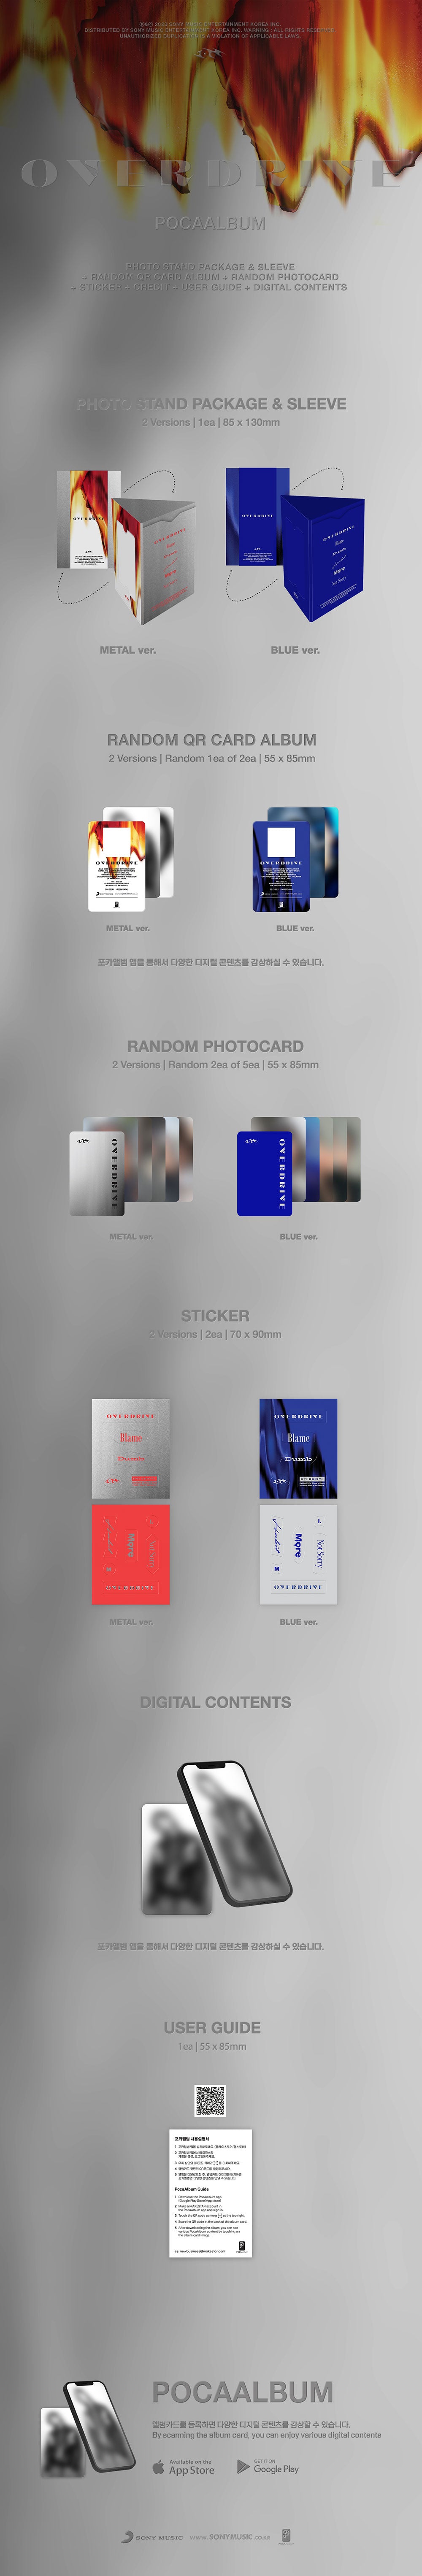 I.M (MONSTA X) - OVERDRIVE (2nd EP Album) Poca Album 2-SET